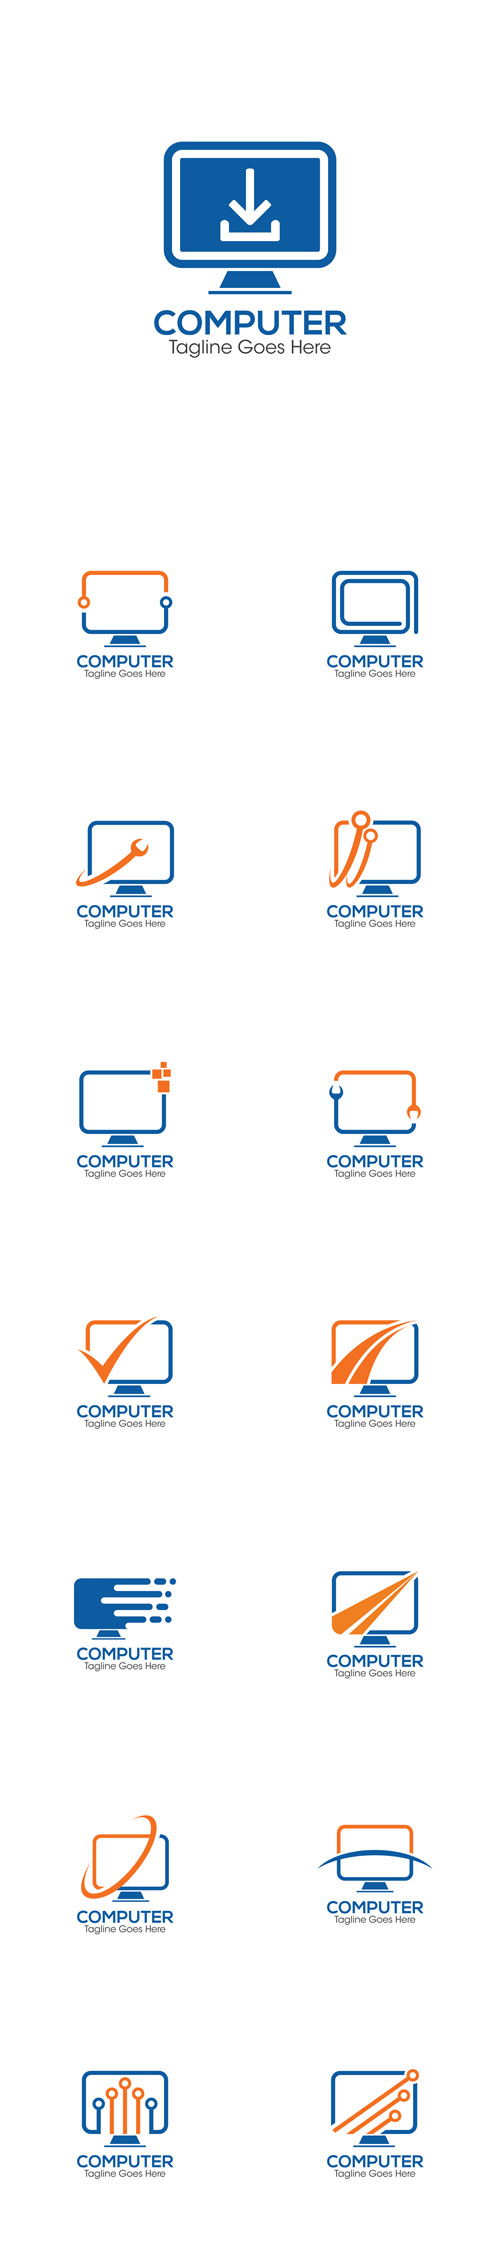 Vectors - Computer Creative Concept Logo Design Templates